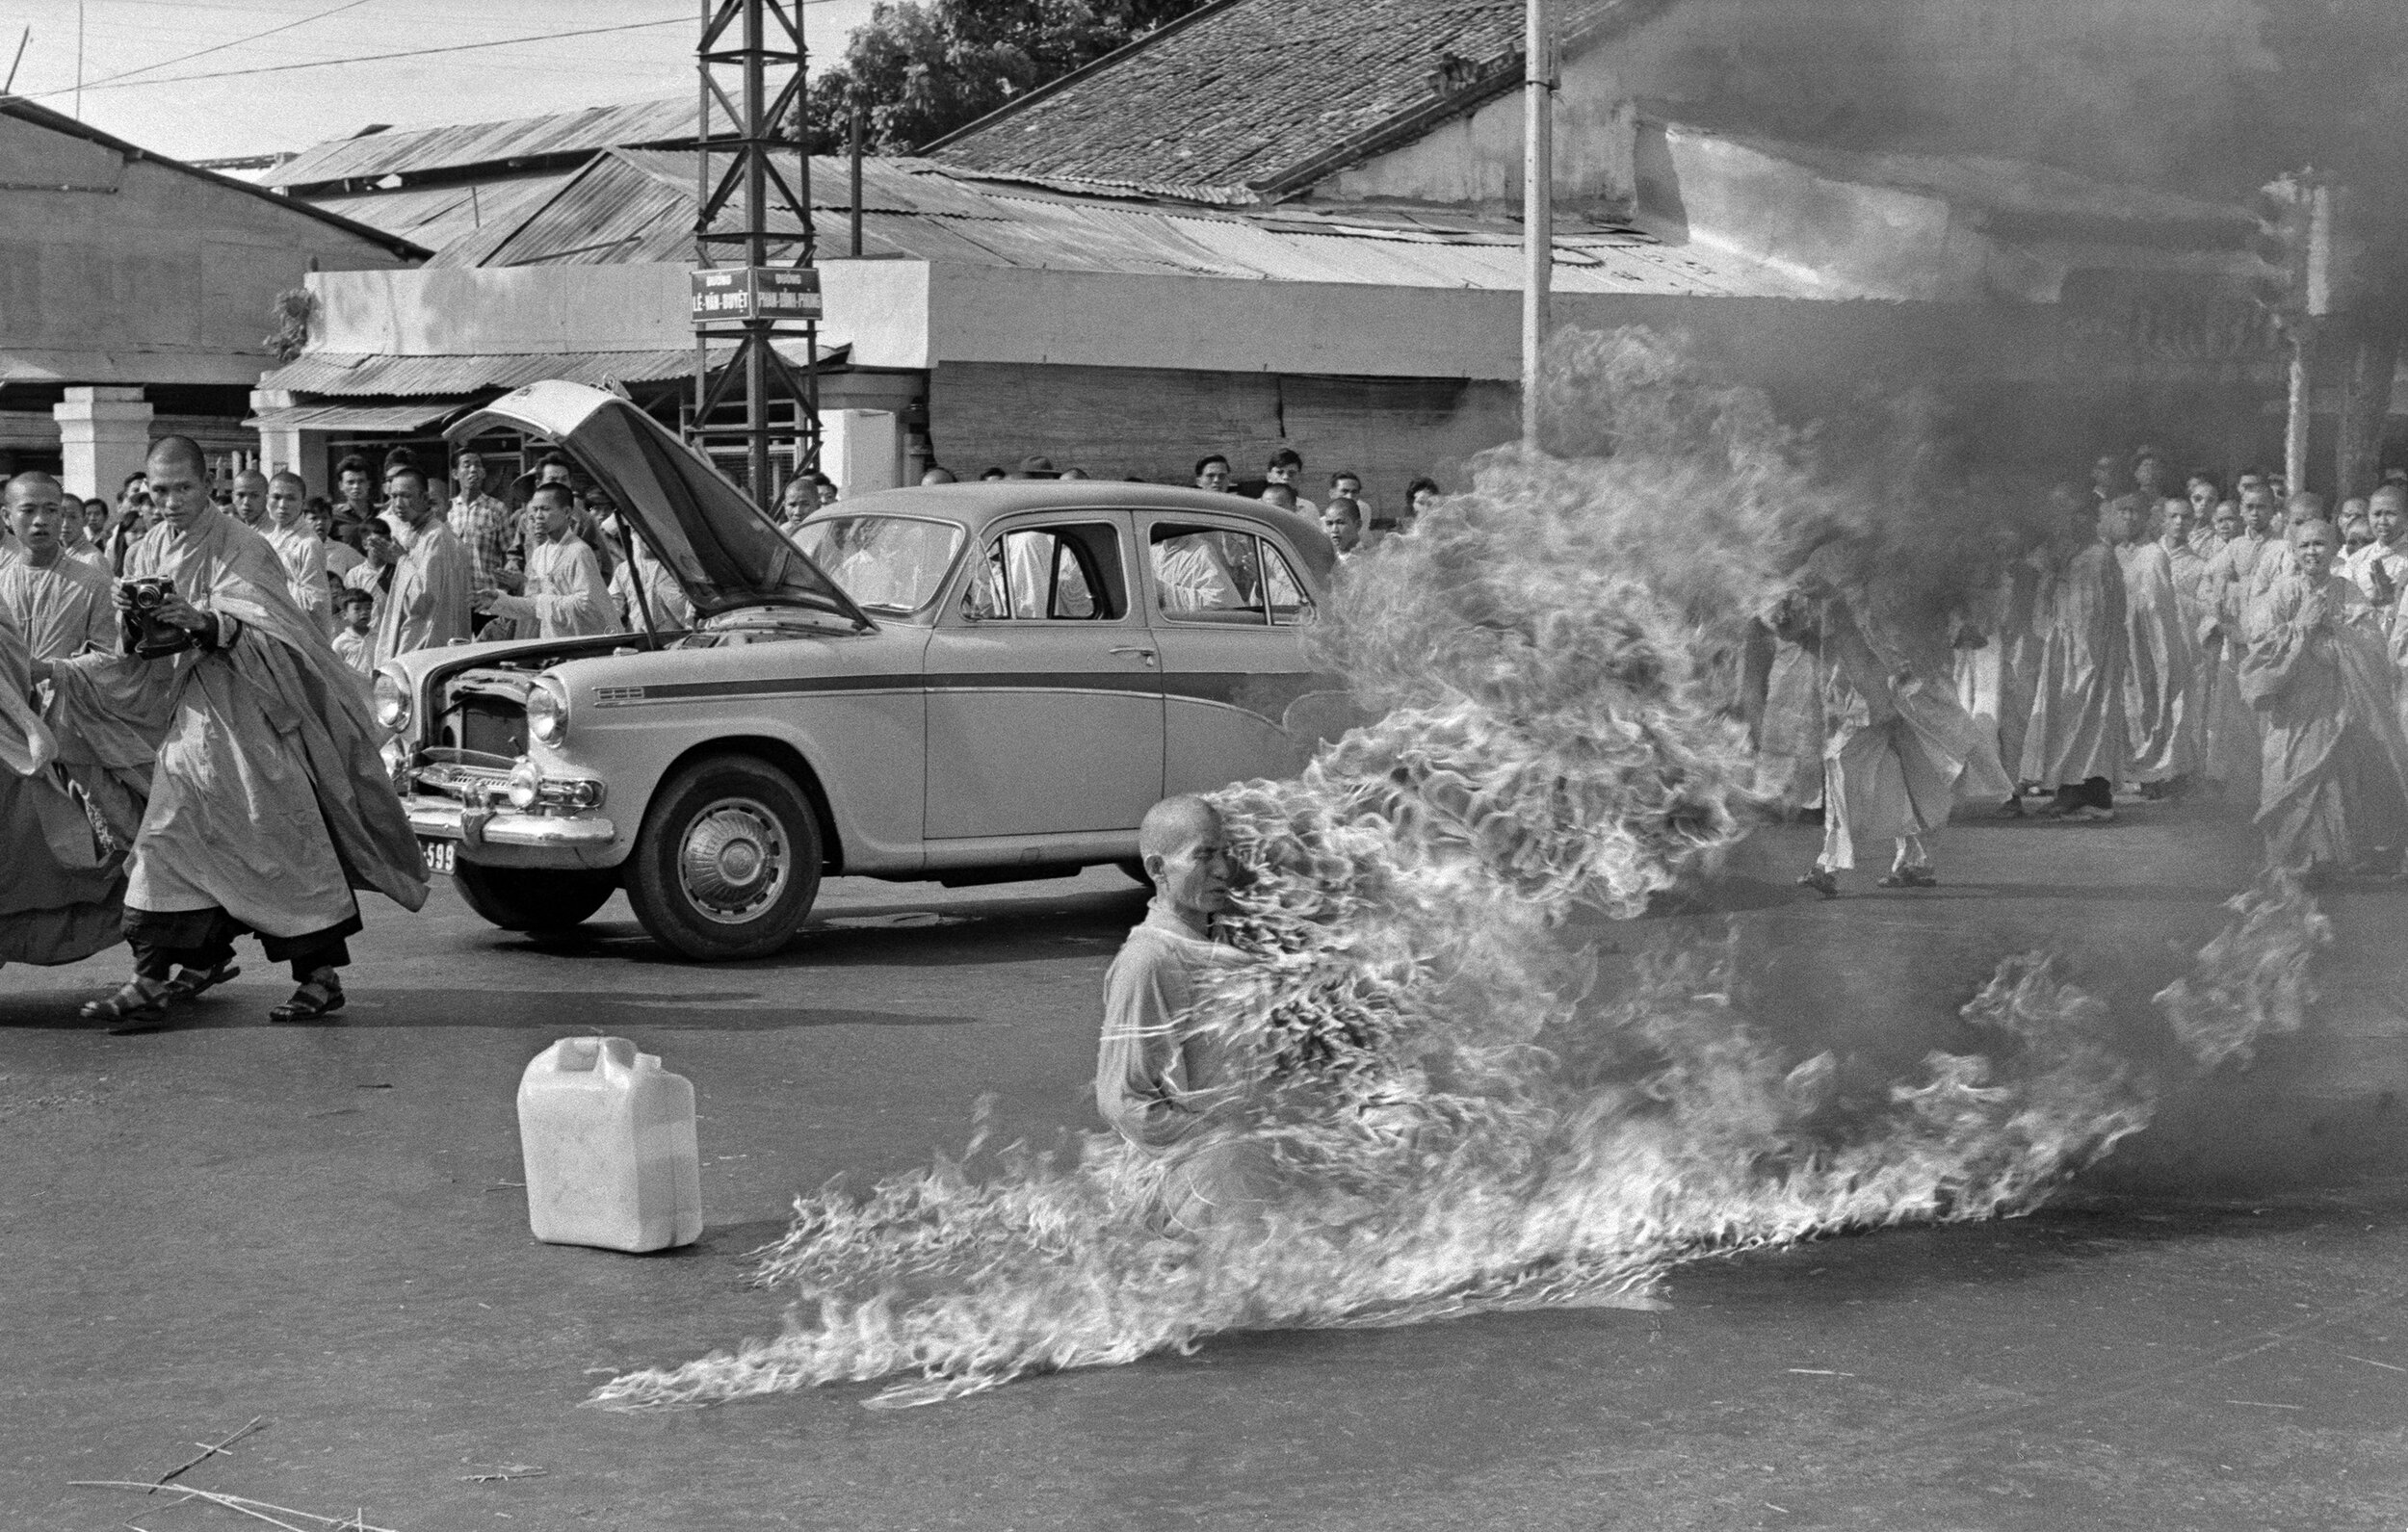 (Photo taken by Associated Press photographer Malcolm Browne, on June 11, 1963, Saigon, South Vietnam.)